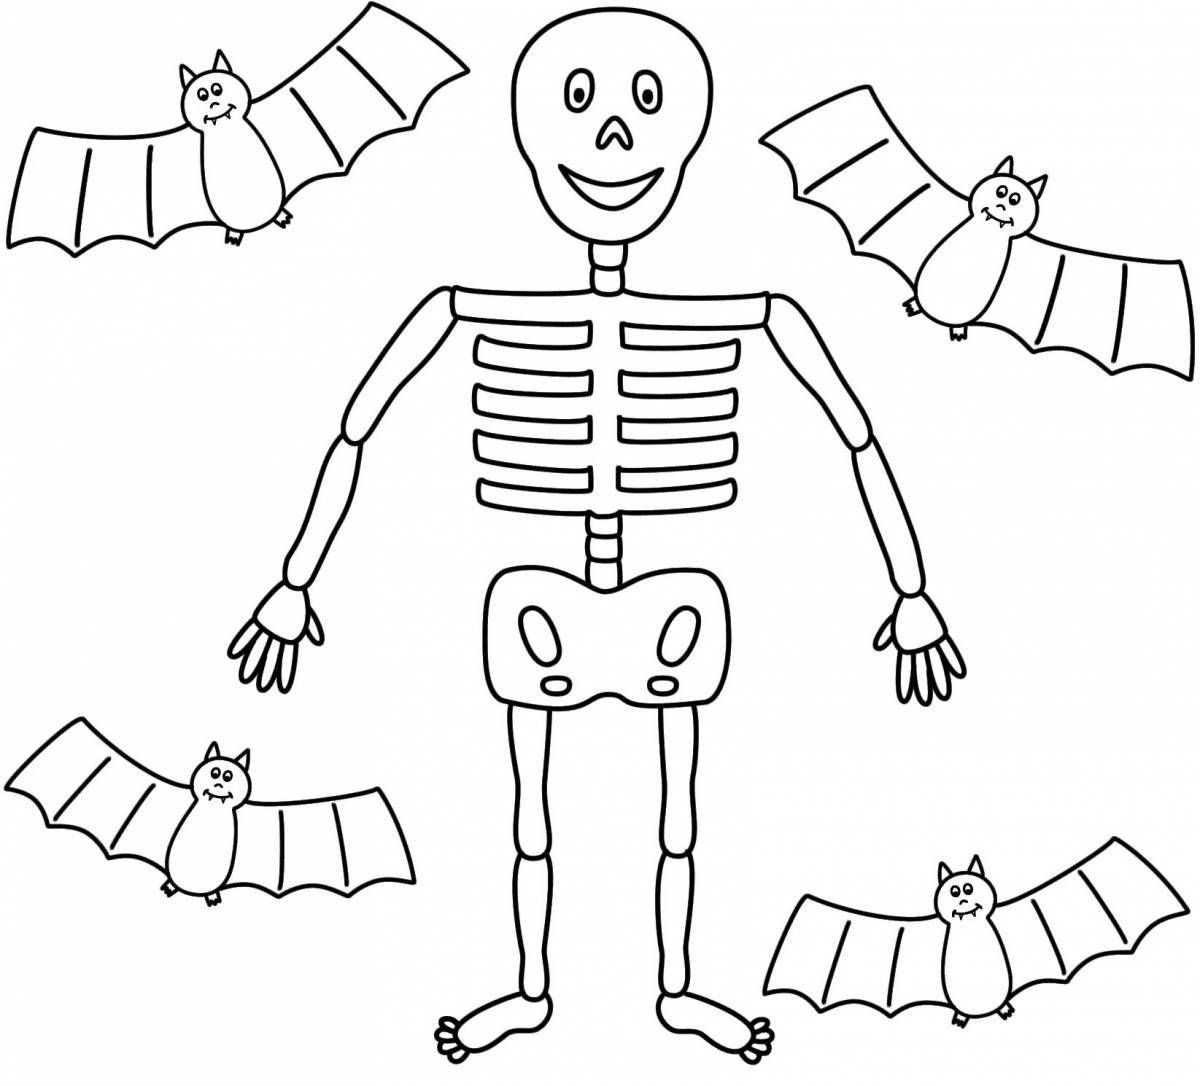 Colored skeleton for kids